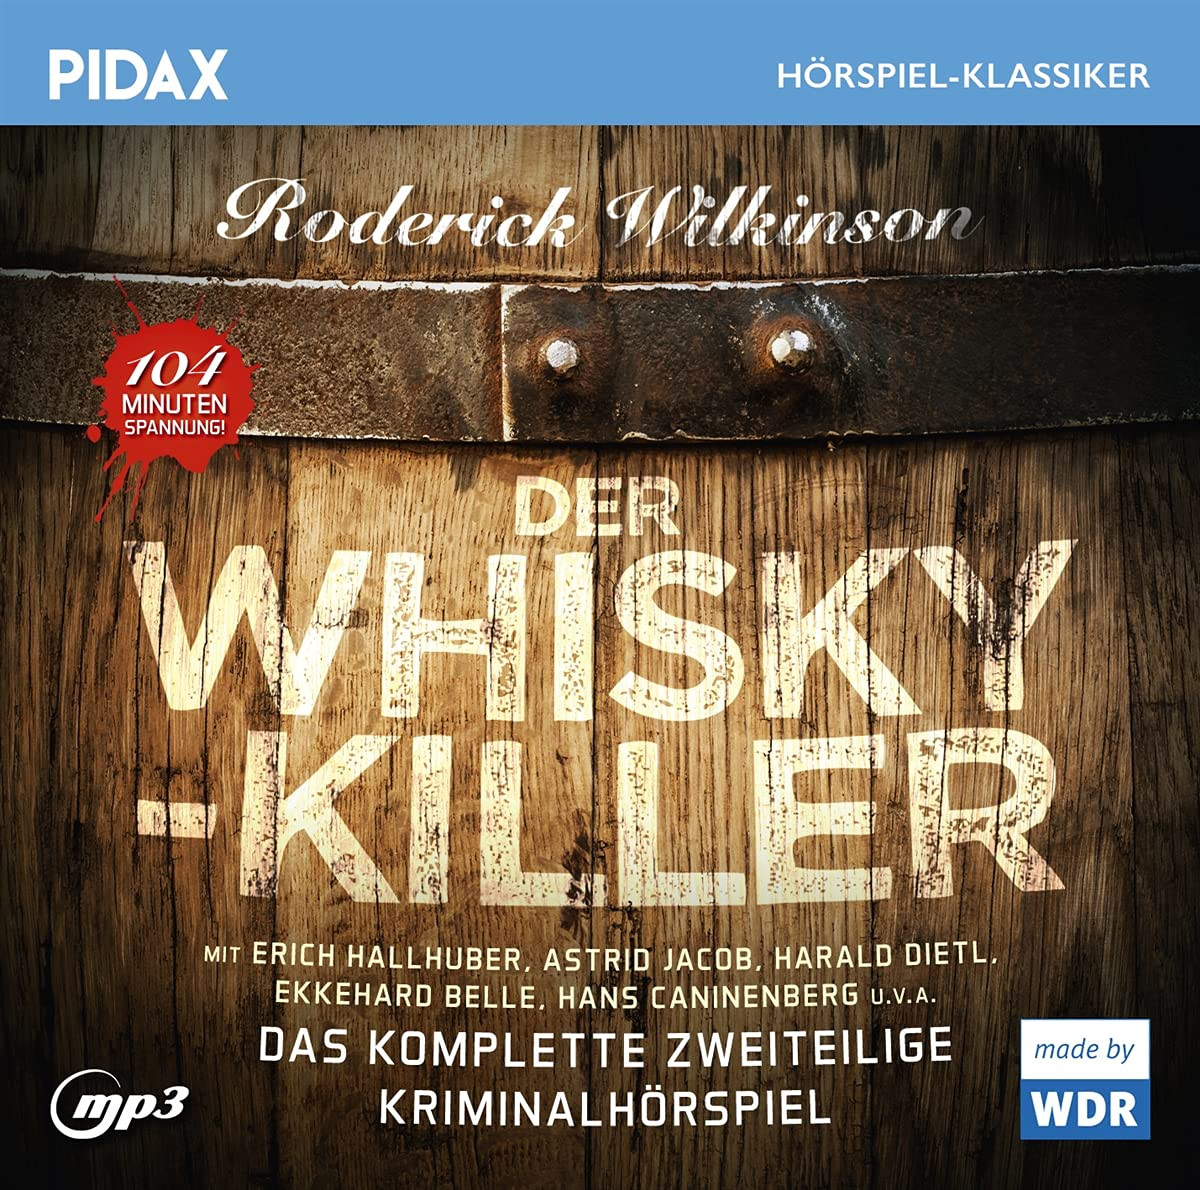 Pidax Hörspiel Klassiker - Der Whisky-Killer